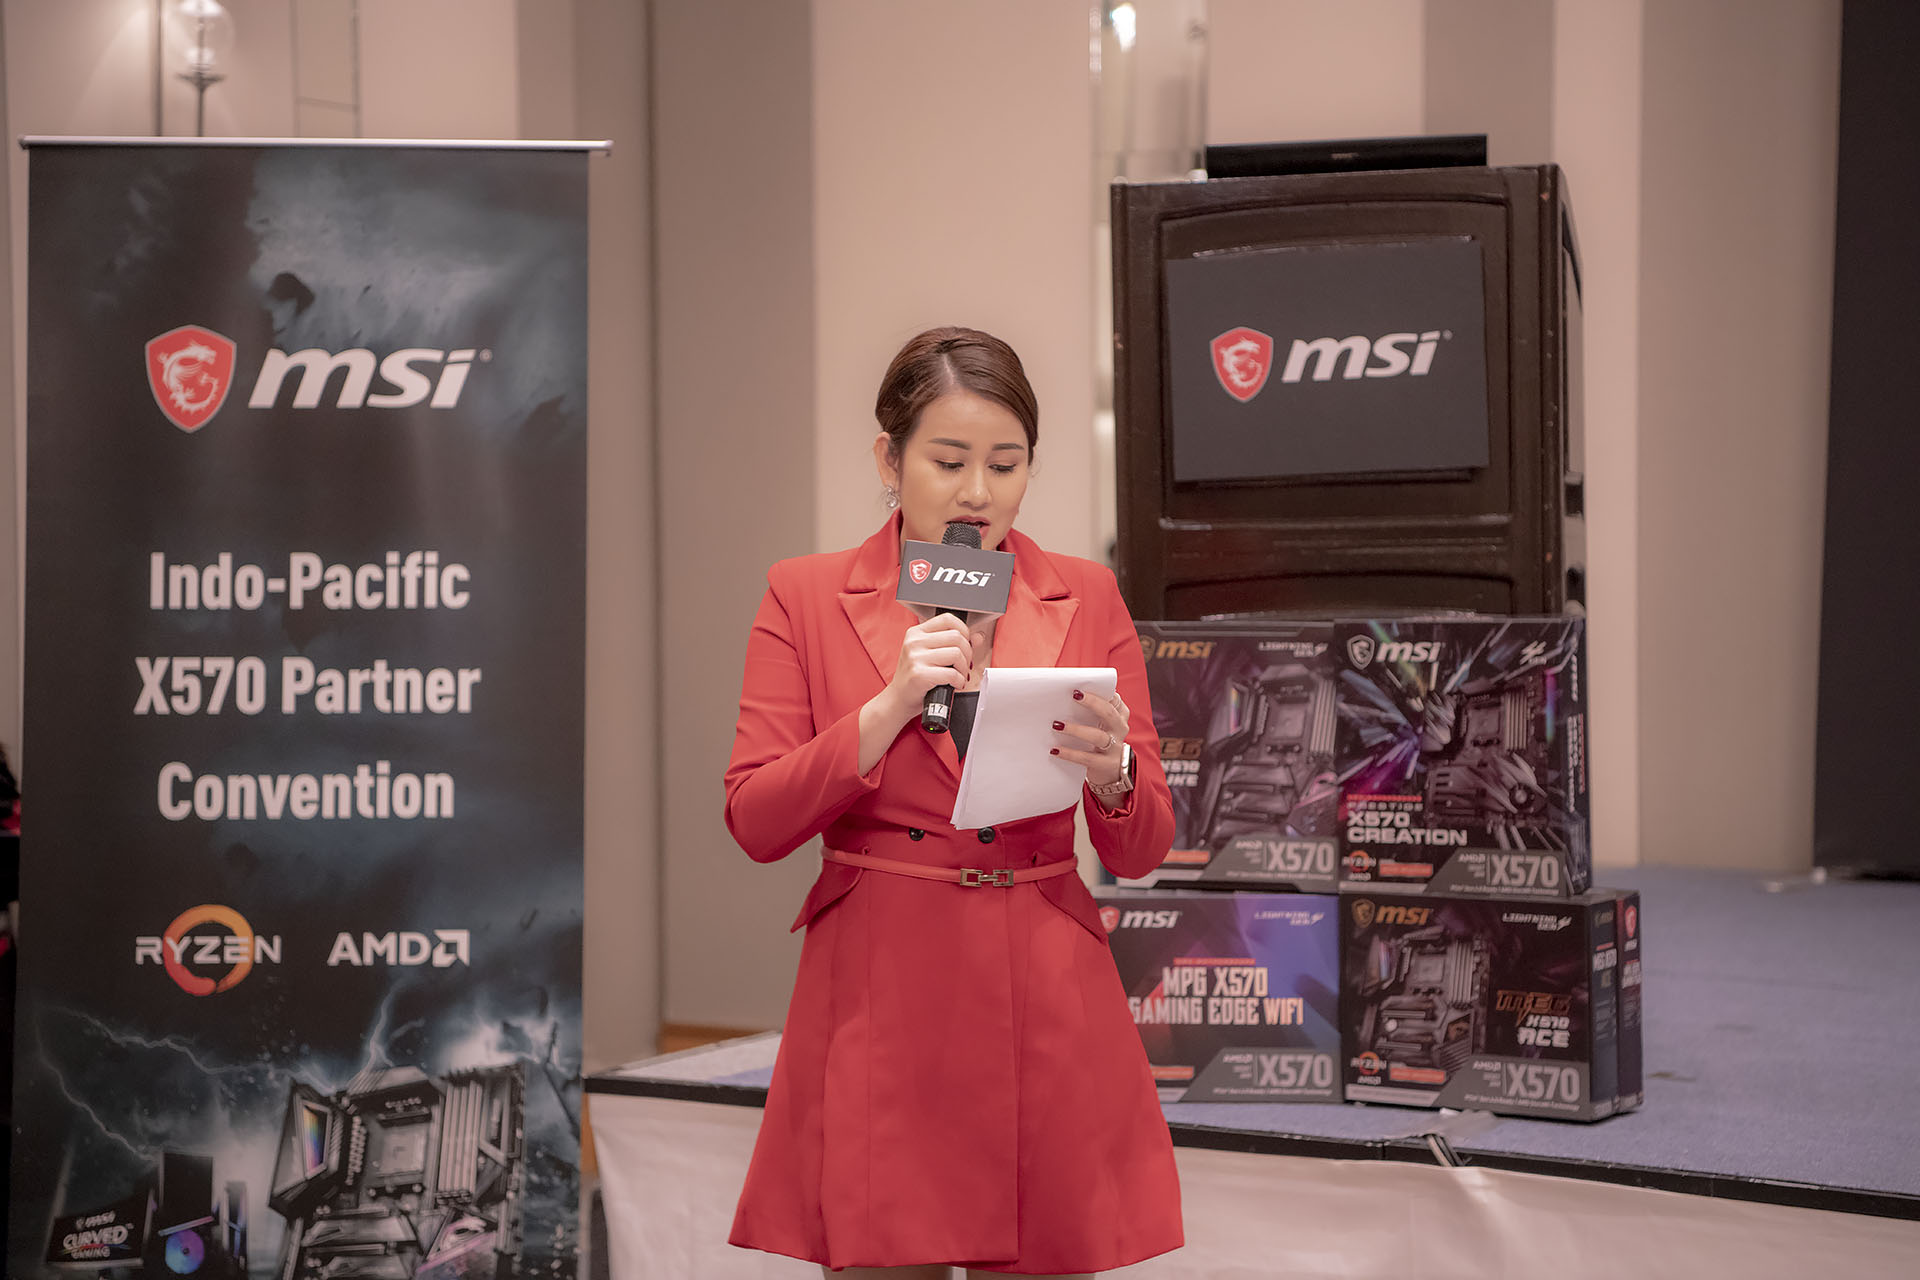 dsc 4962 บรรยากาศงาน MSI Indo Pacific X570 Partner Convention พบการเปิดตัวเมนบอร์ด X570 รุ่นใหม่ล่าสุดจากทาง MSI ต้อนรับการมาของซีพียู AMD RYZEN 3000ซีรี่ย์ 